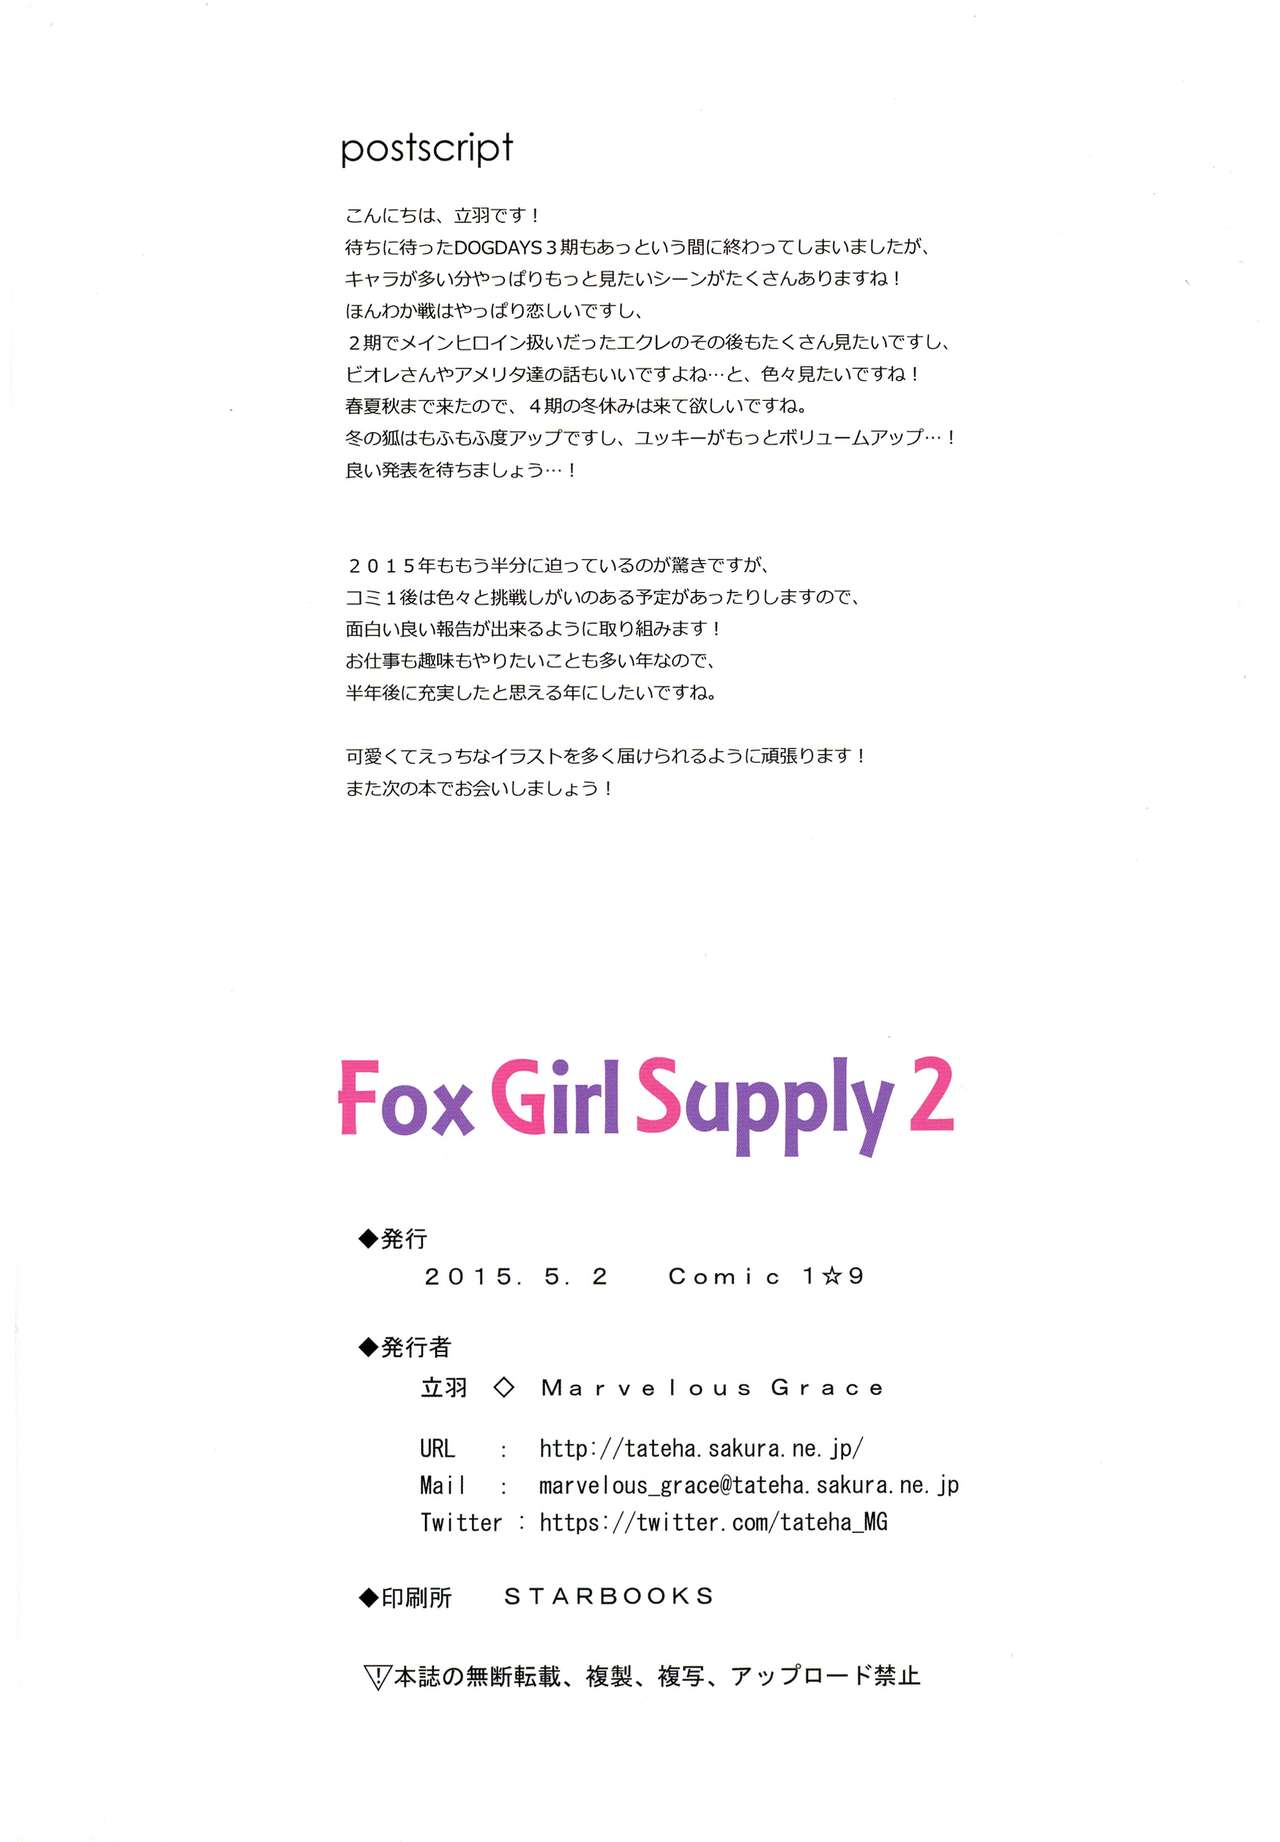 (COMIC1☆9) [Marvelous Grace (立羽)] Fox Girl Supply 2 (DOG DAYS)